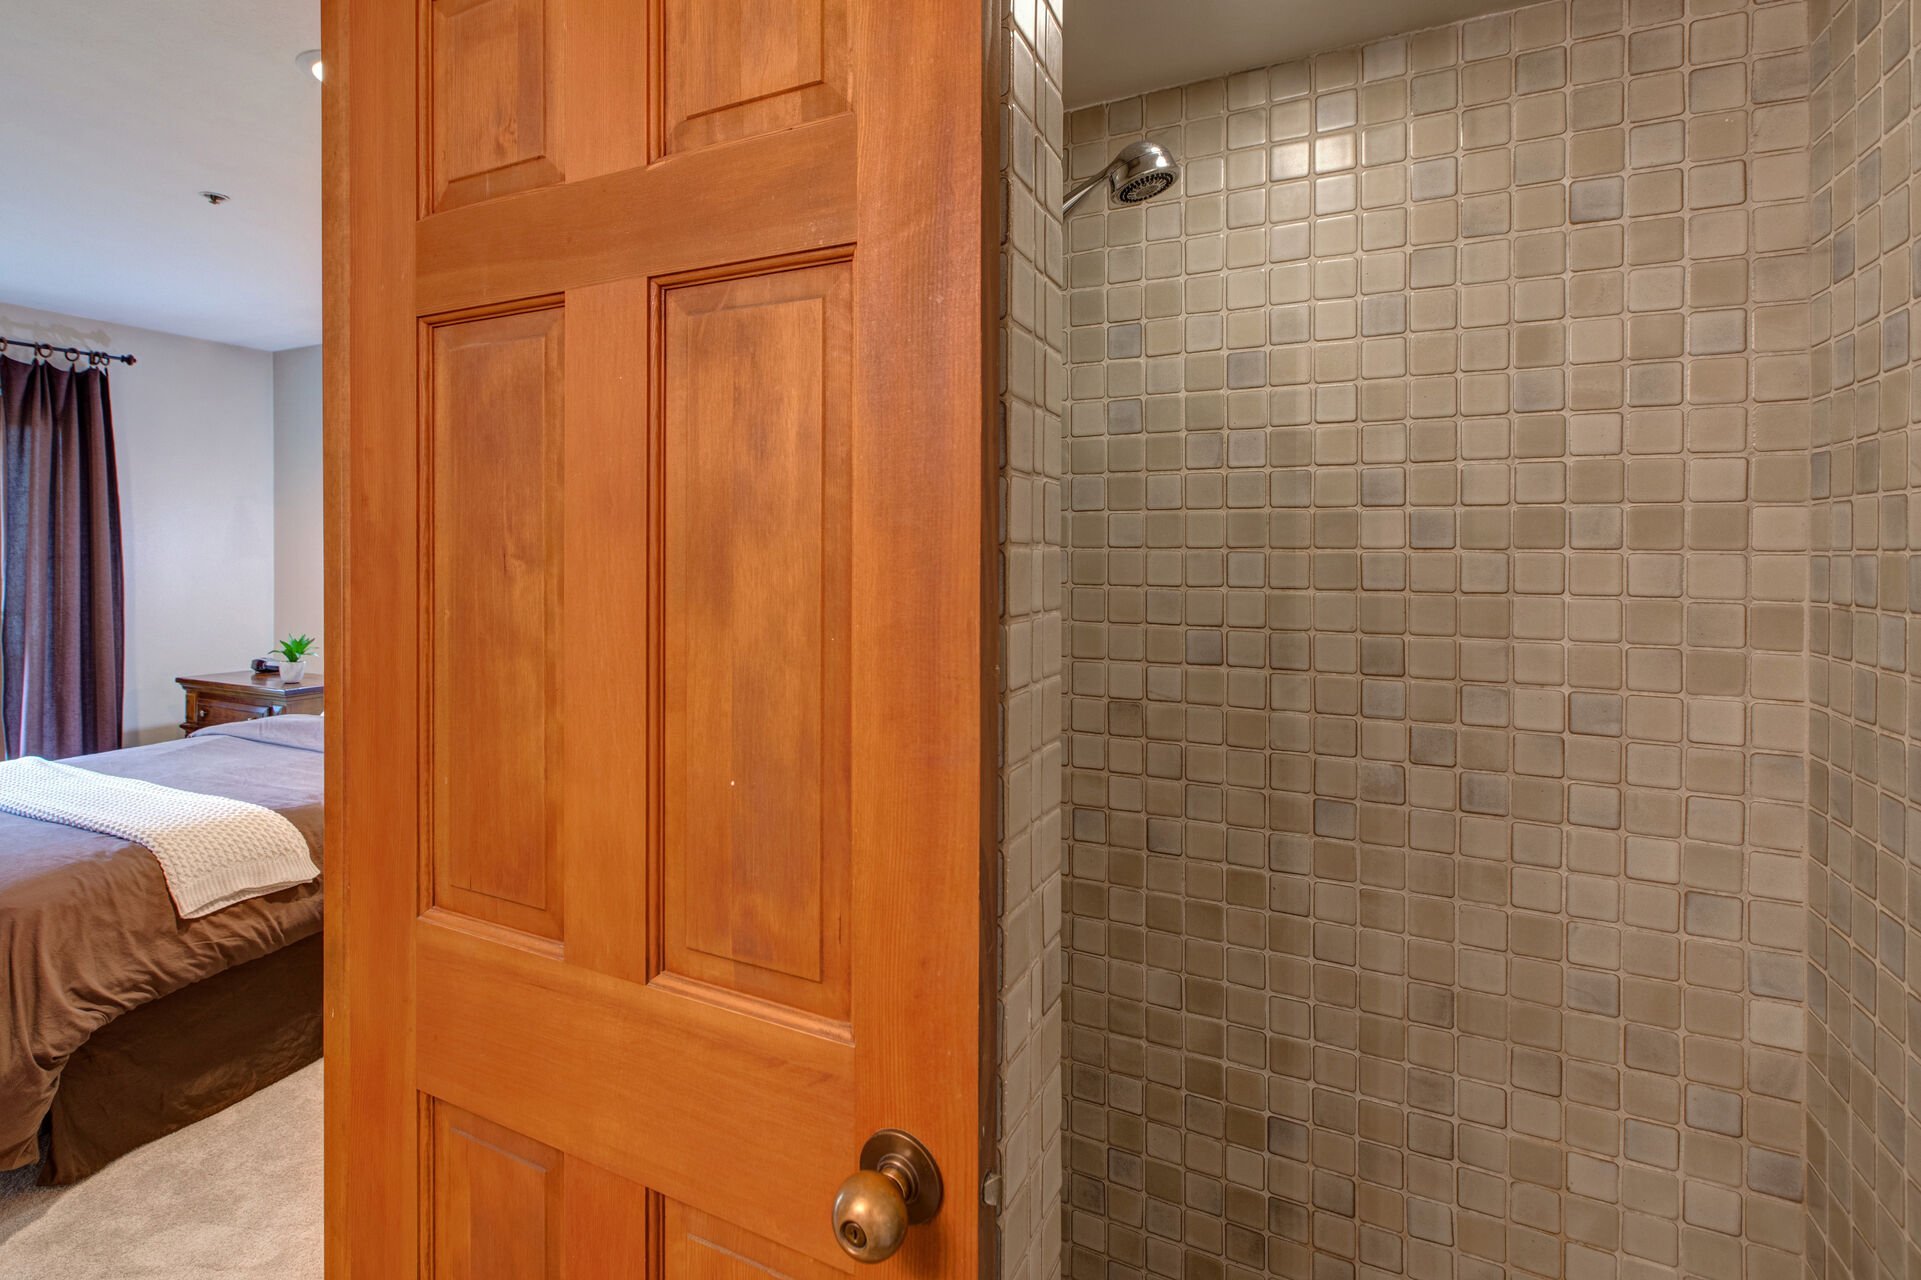 Bedroom 2 Bathroom with tiled shower